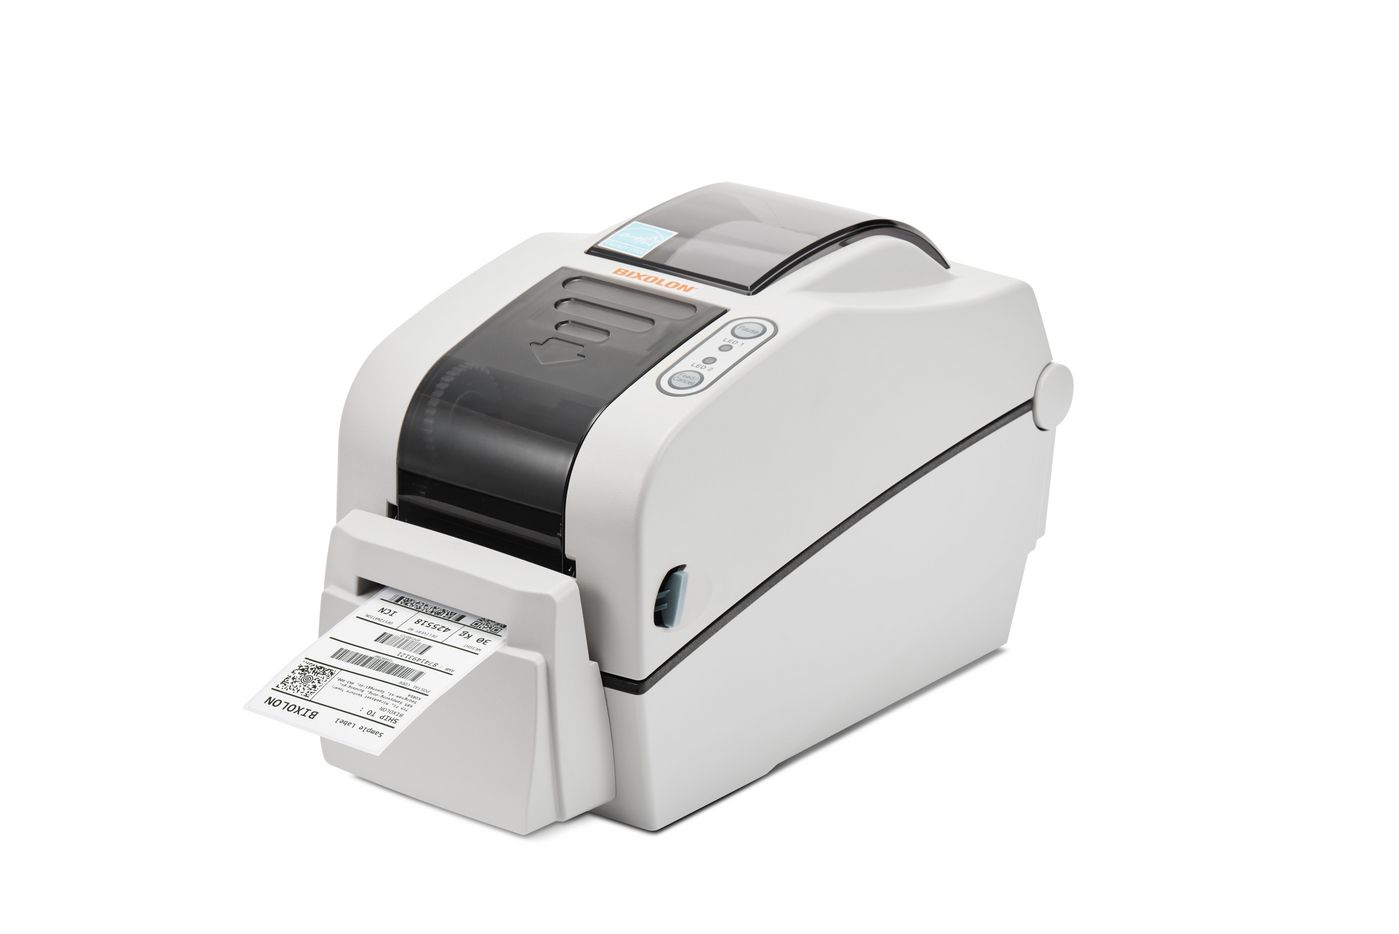 Slp-tx220de -  Label Printer - Direct Thermal - USB / Parallel /ethrnrt